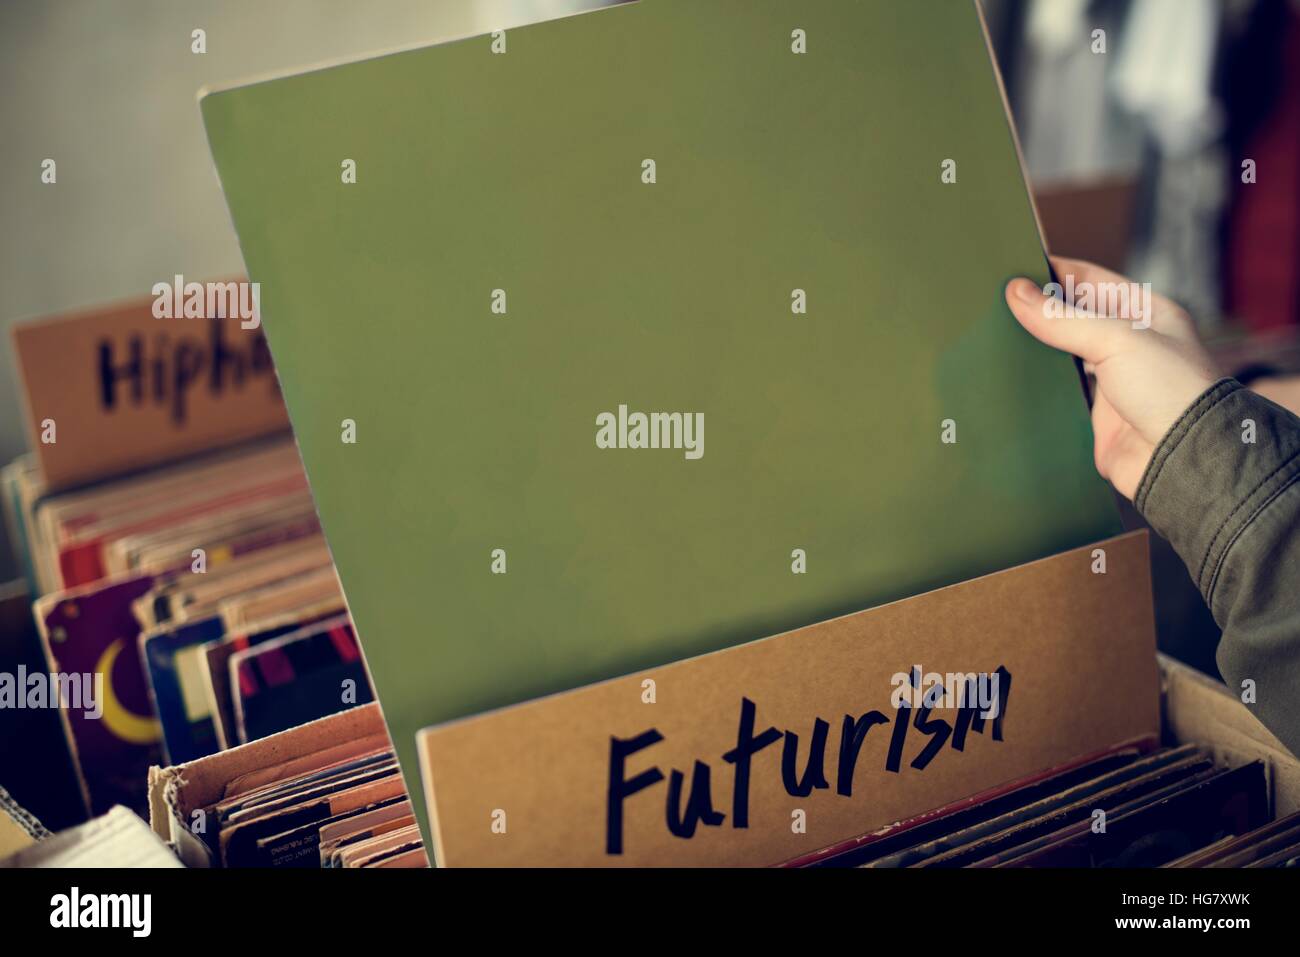 Futurism Music Audio Relaxation Rhythm Vinyl Concept Stock Photo